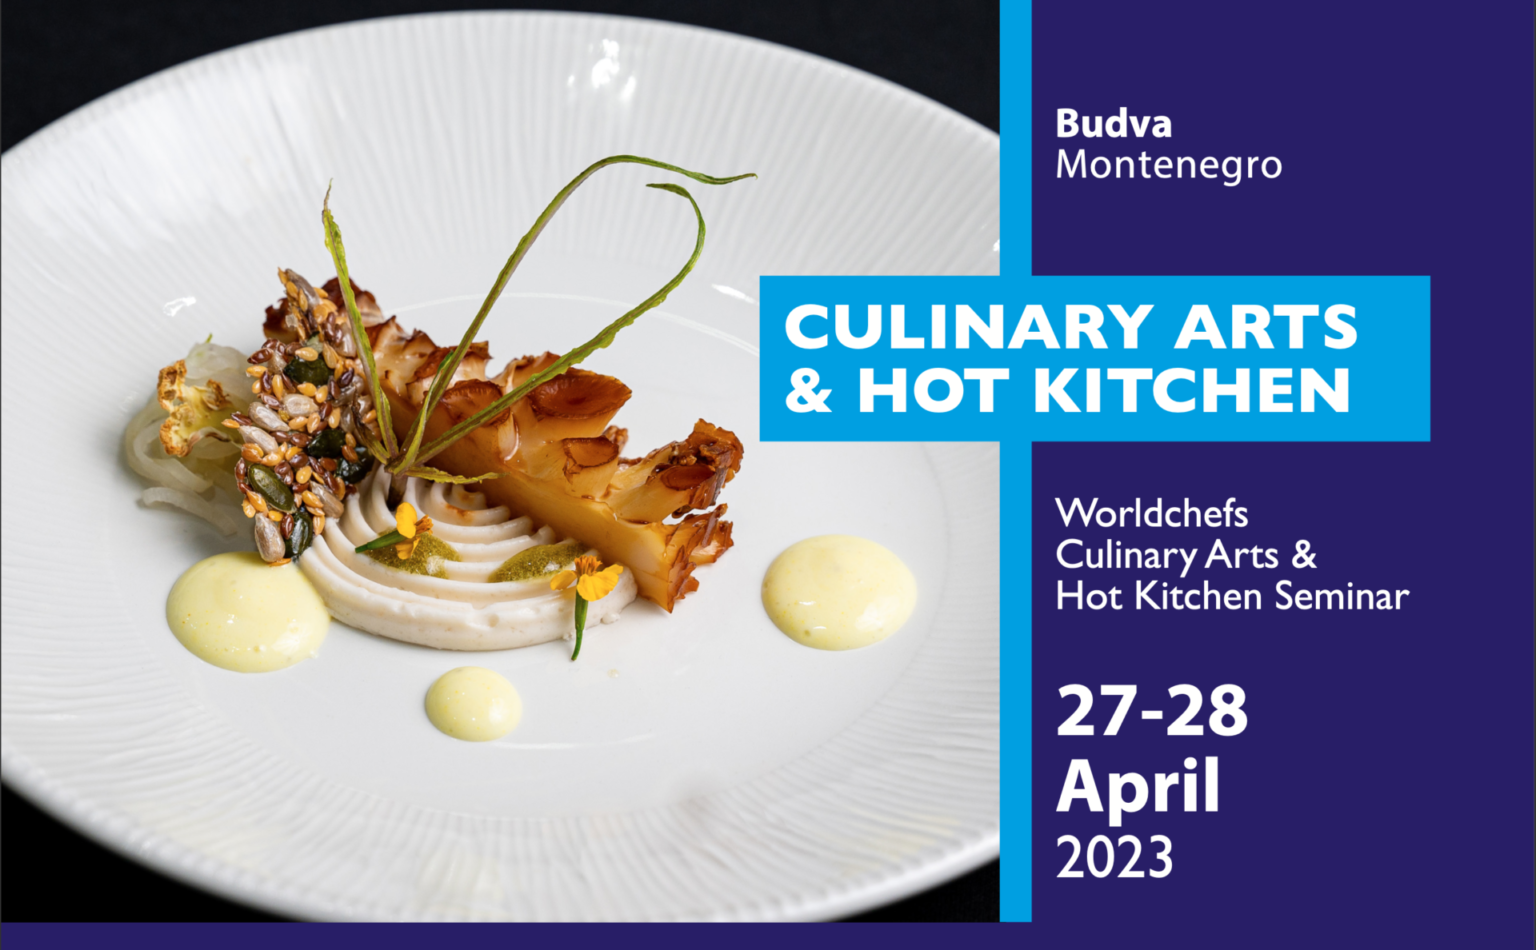 Hot Kitchen & Culinary Arts Competition Seminar: Budva